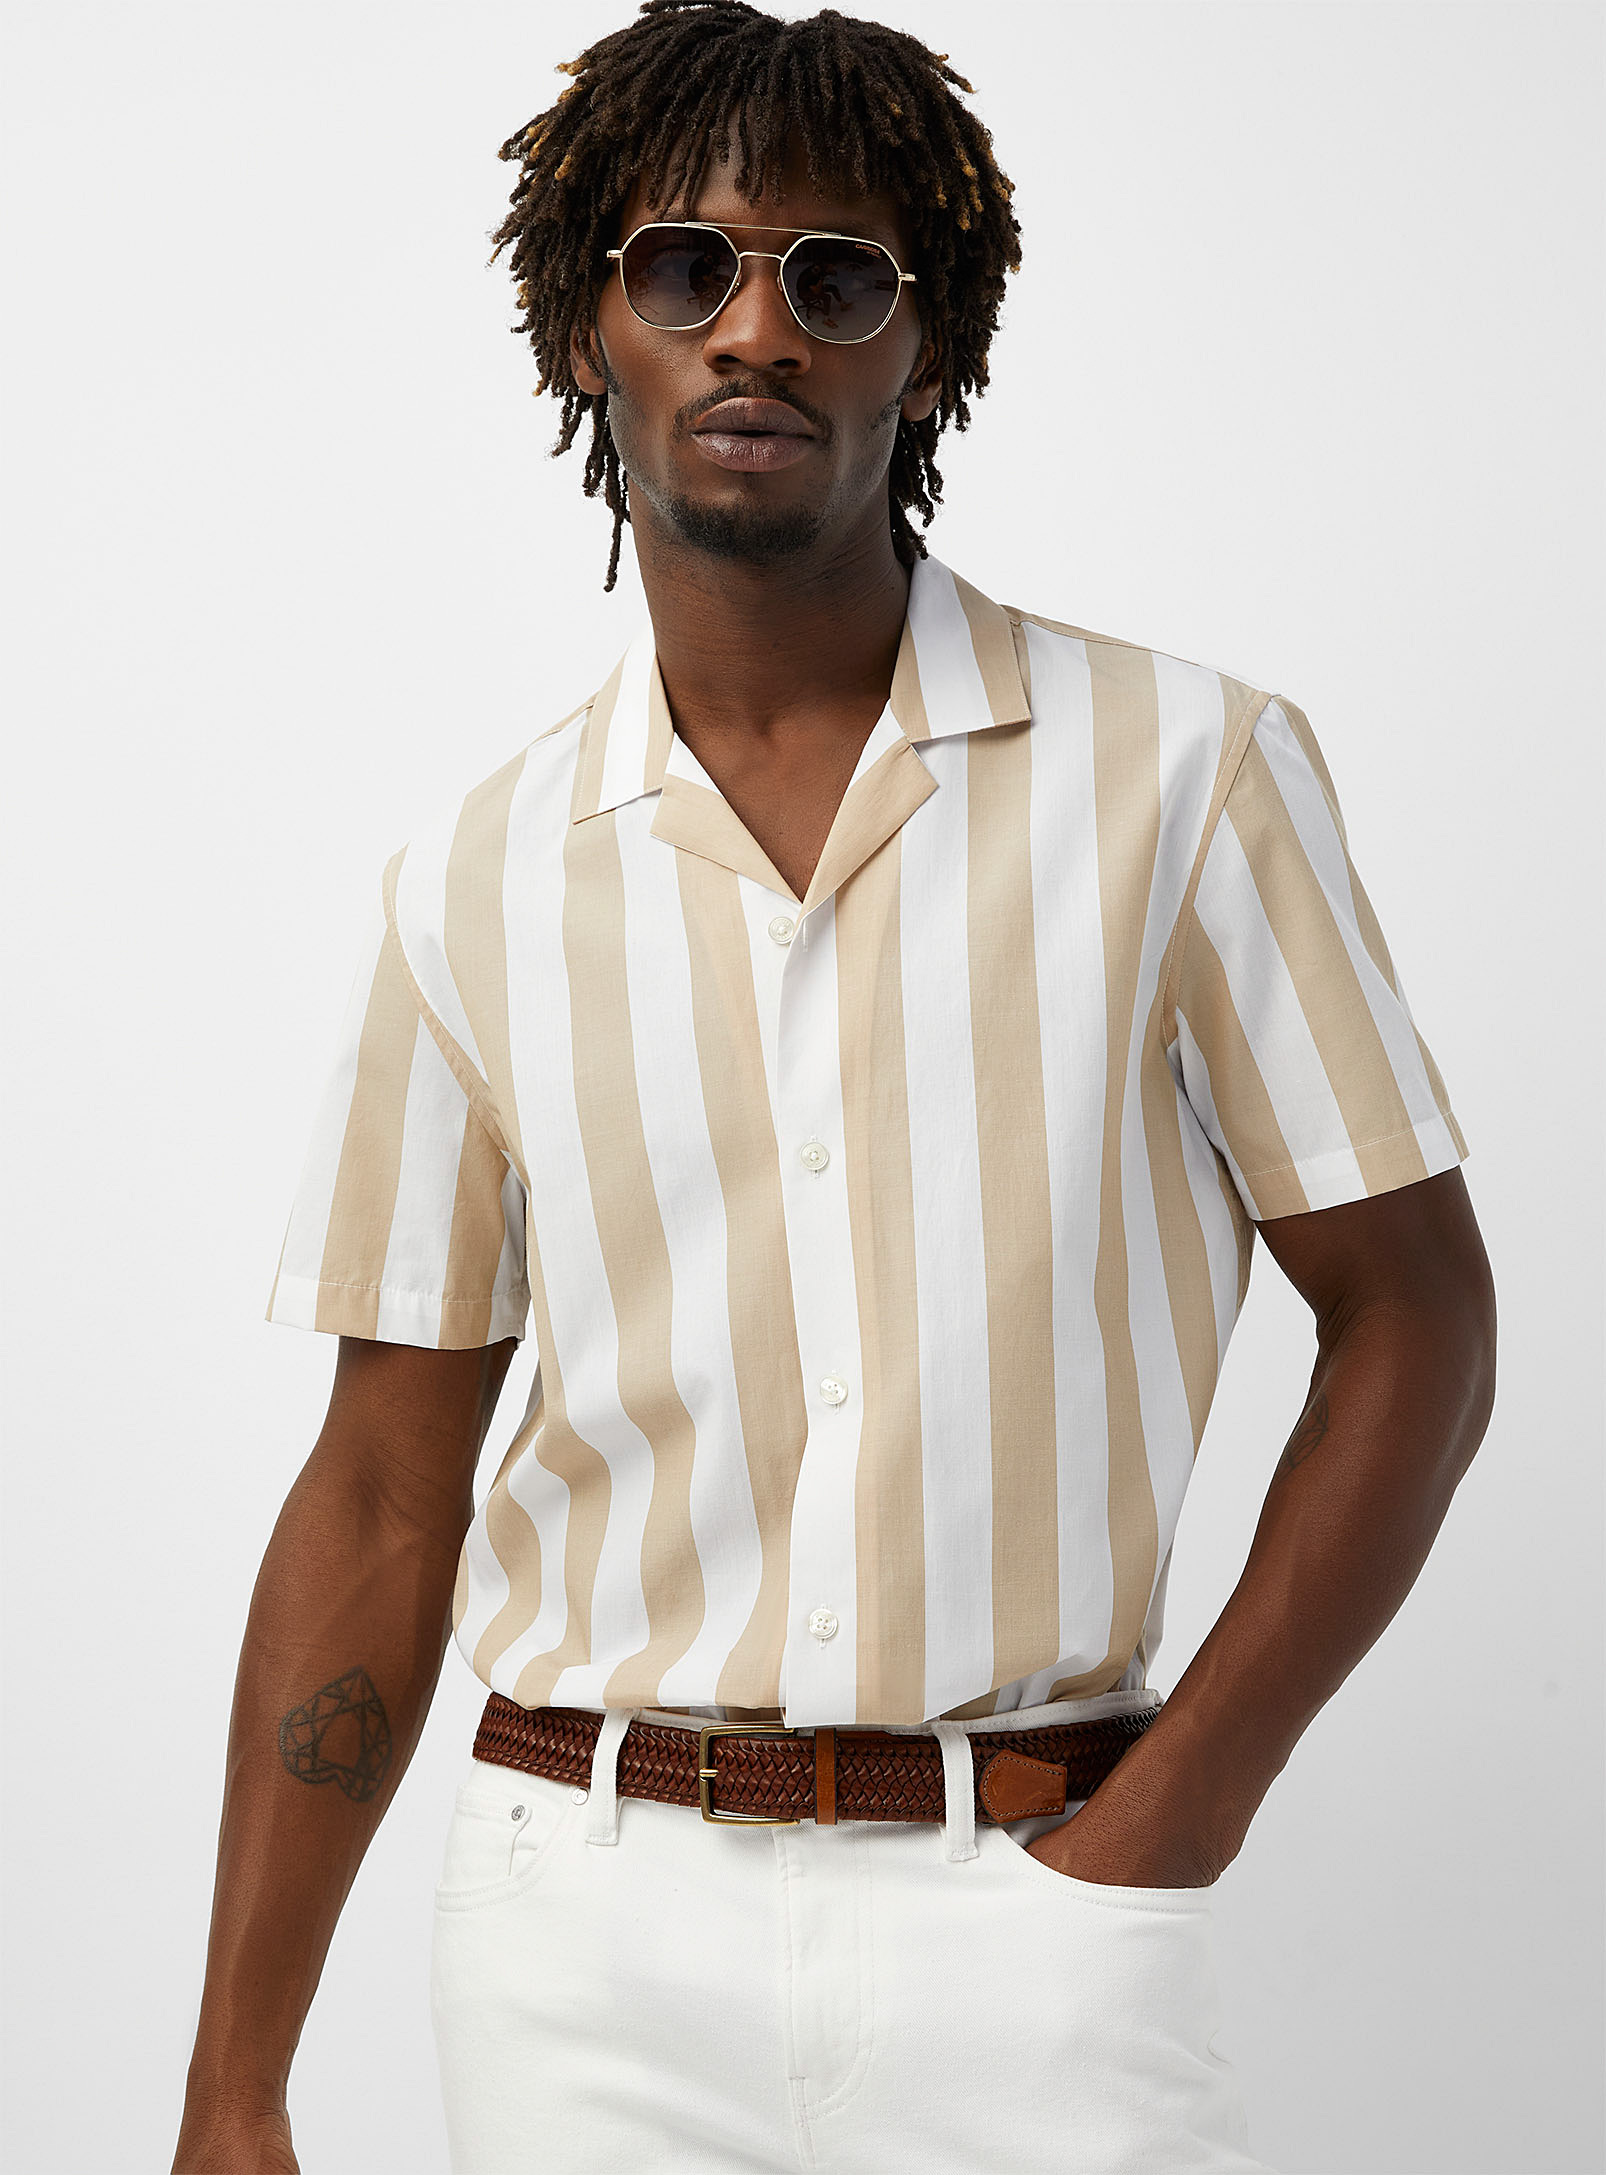 Michael Kors - Men's Sand stripe camp shirt